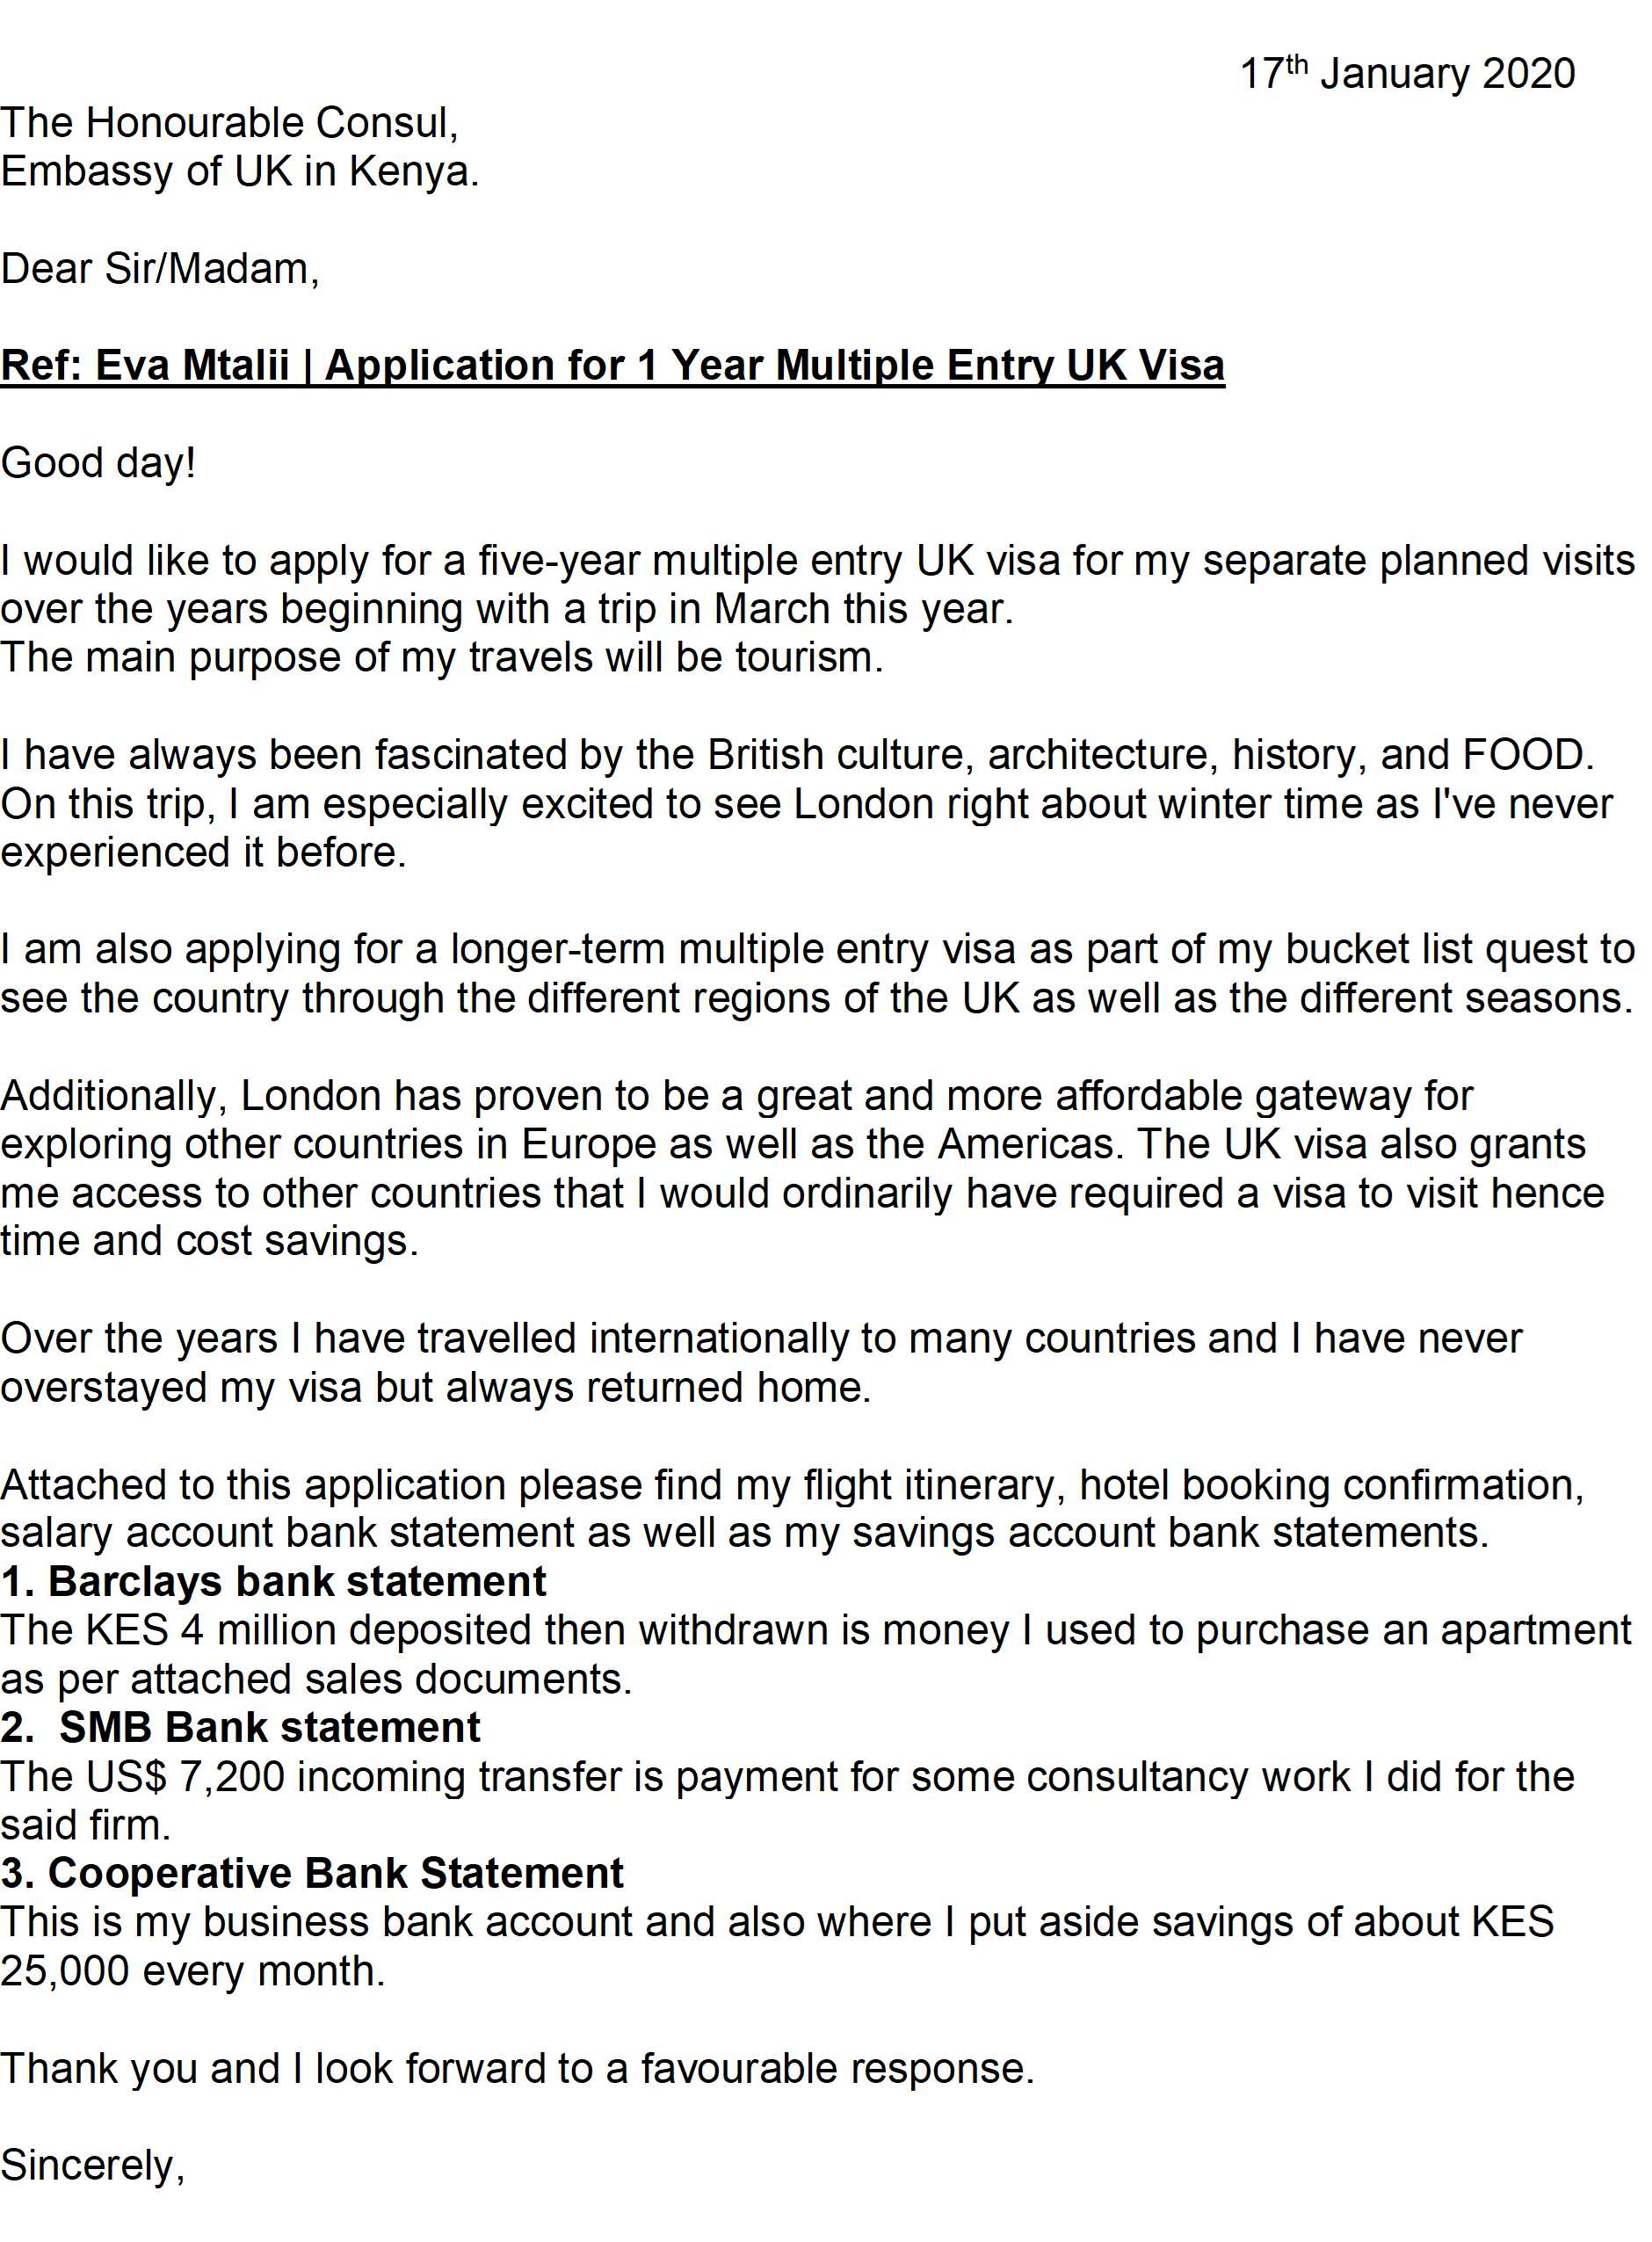 visa application letter